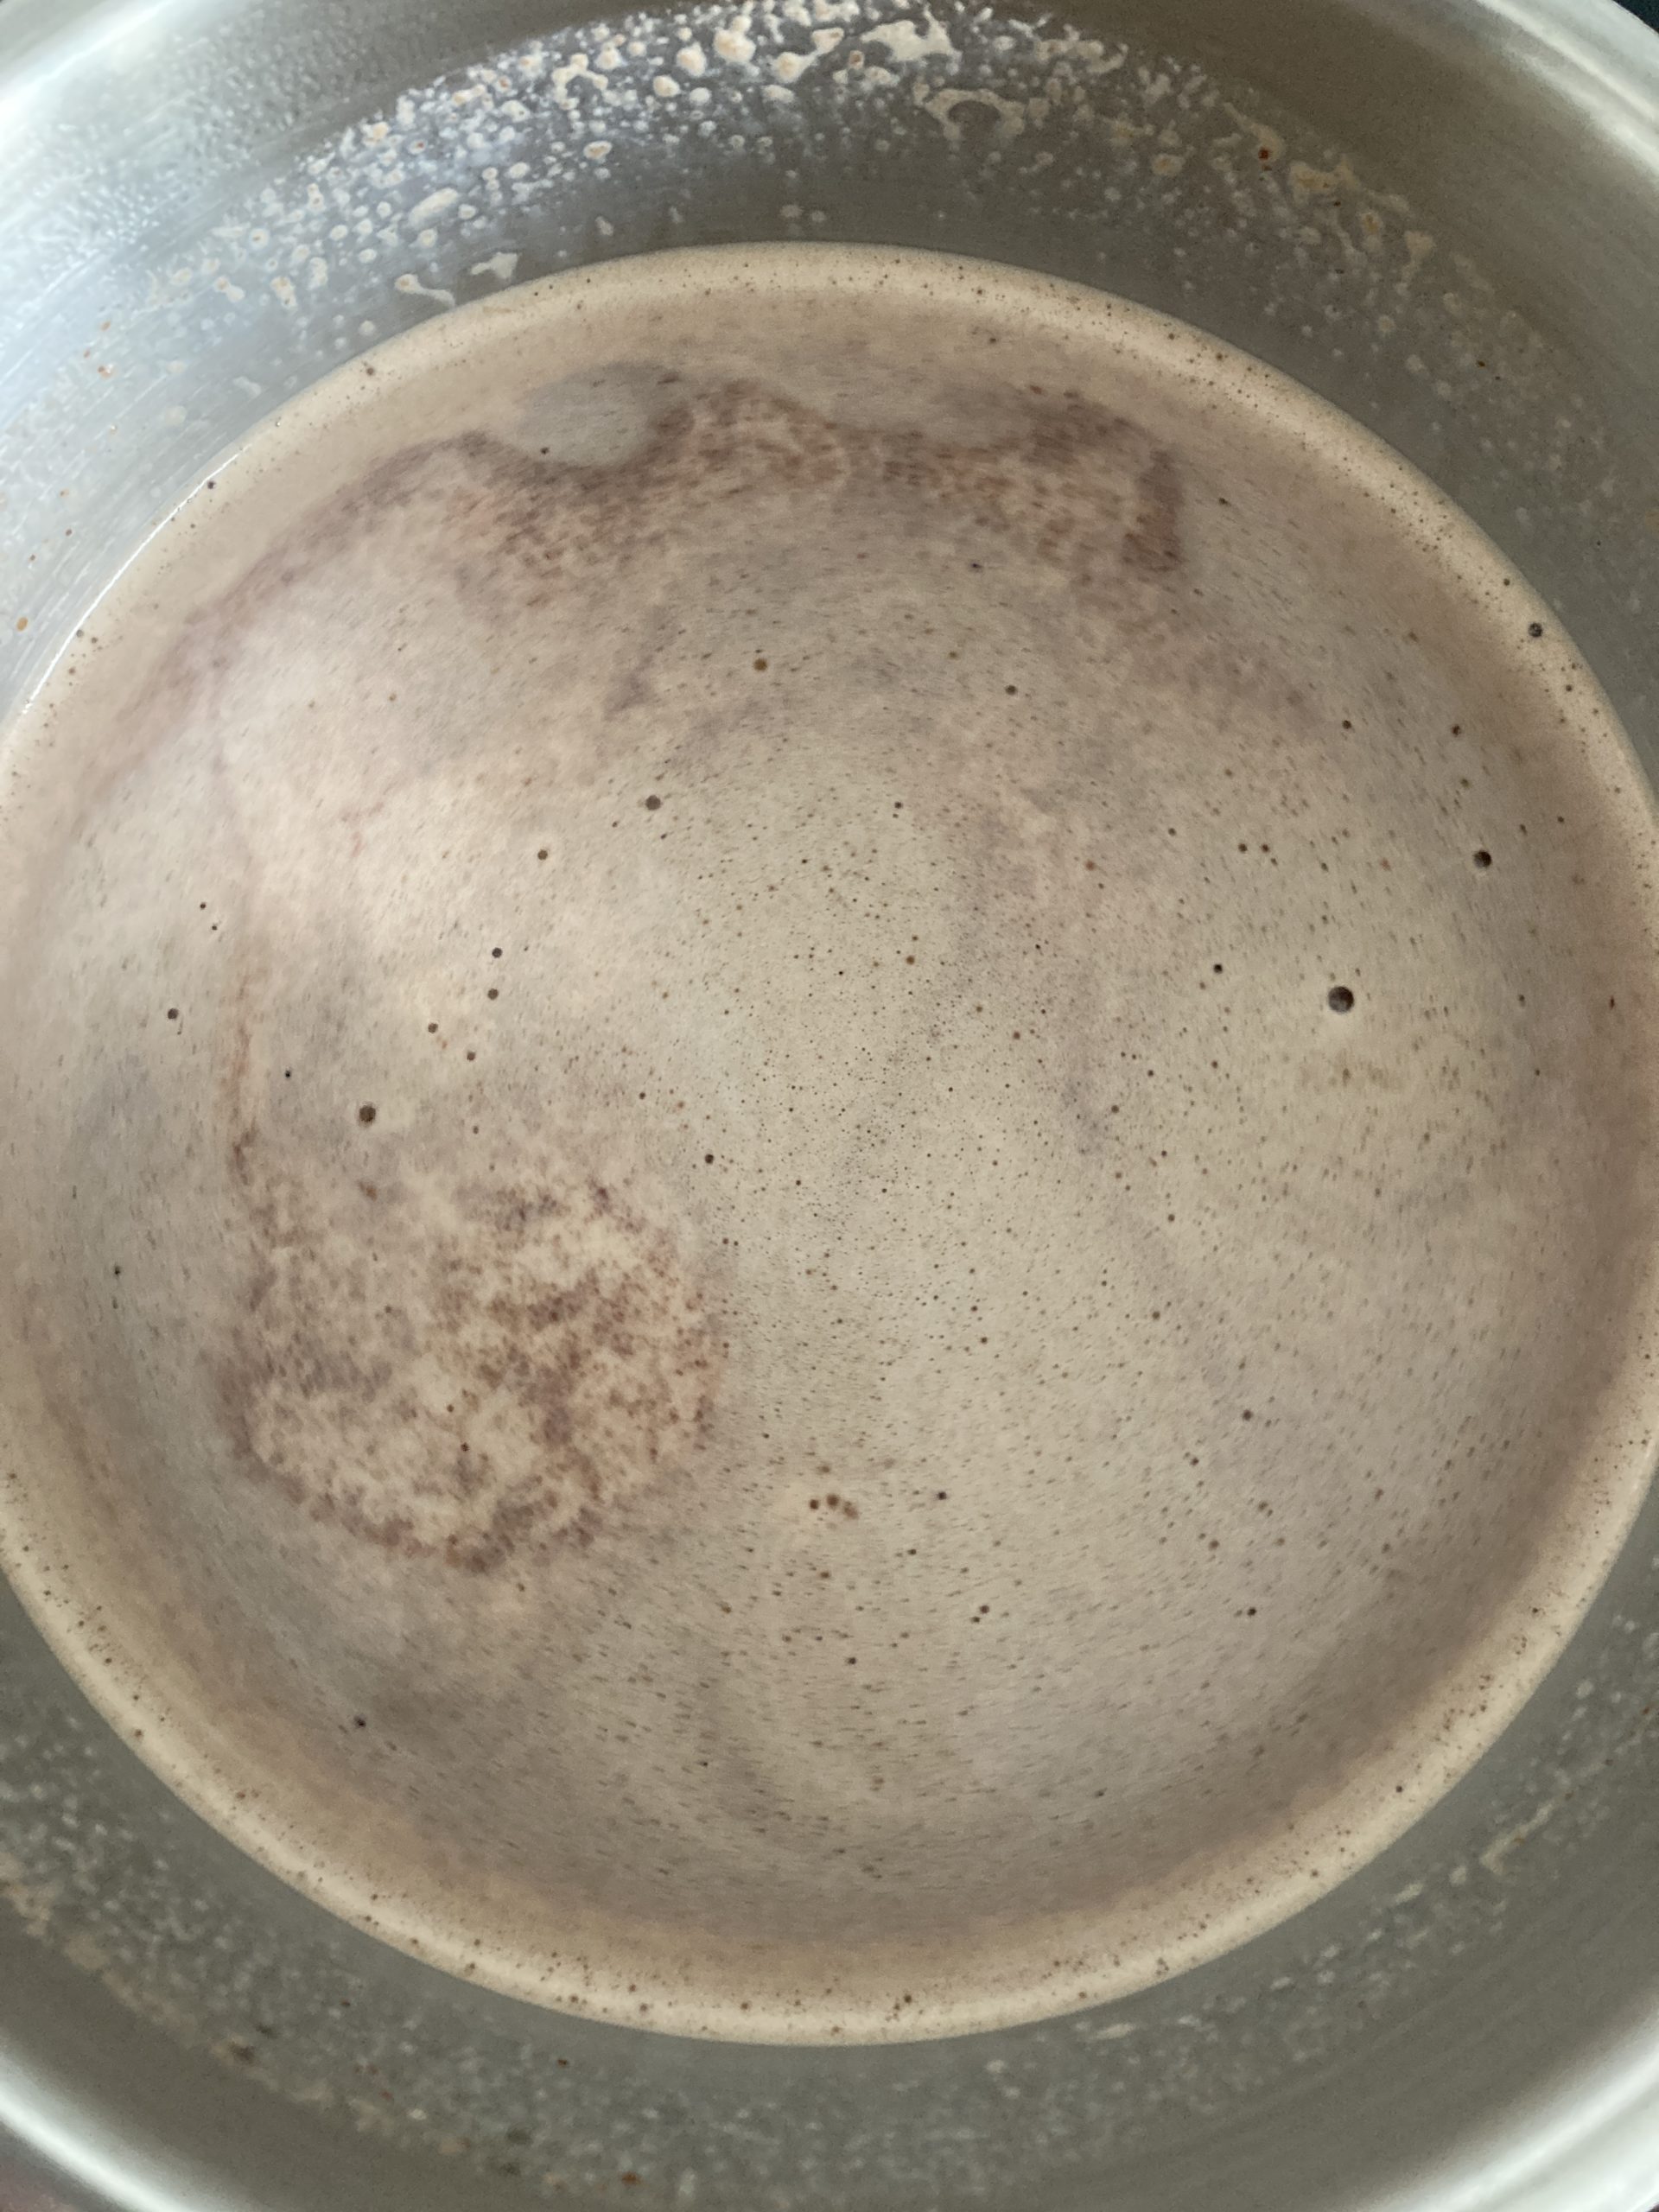 Hot chocolate preparation